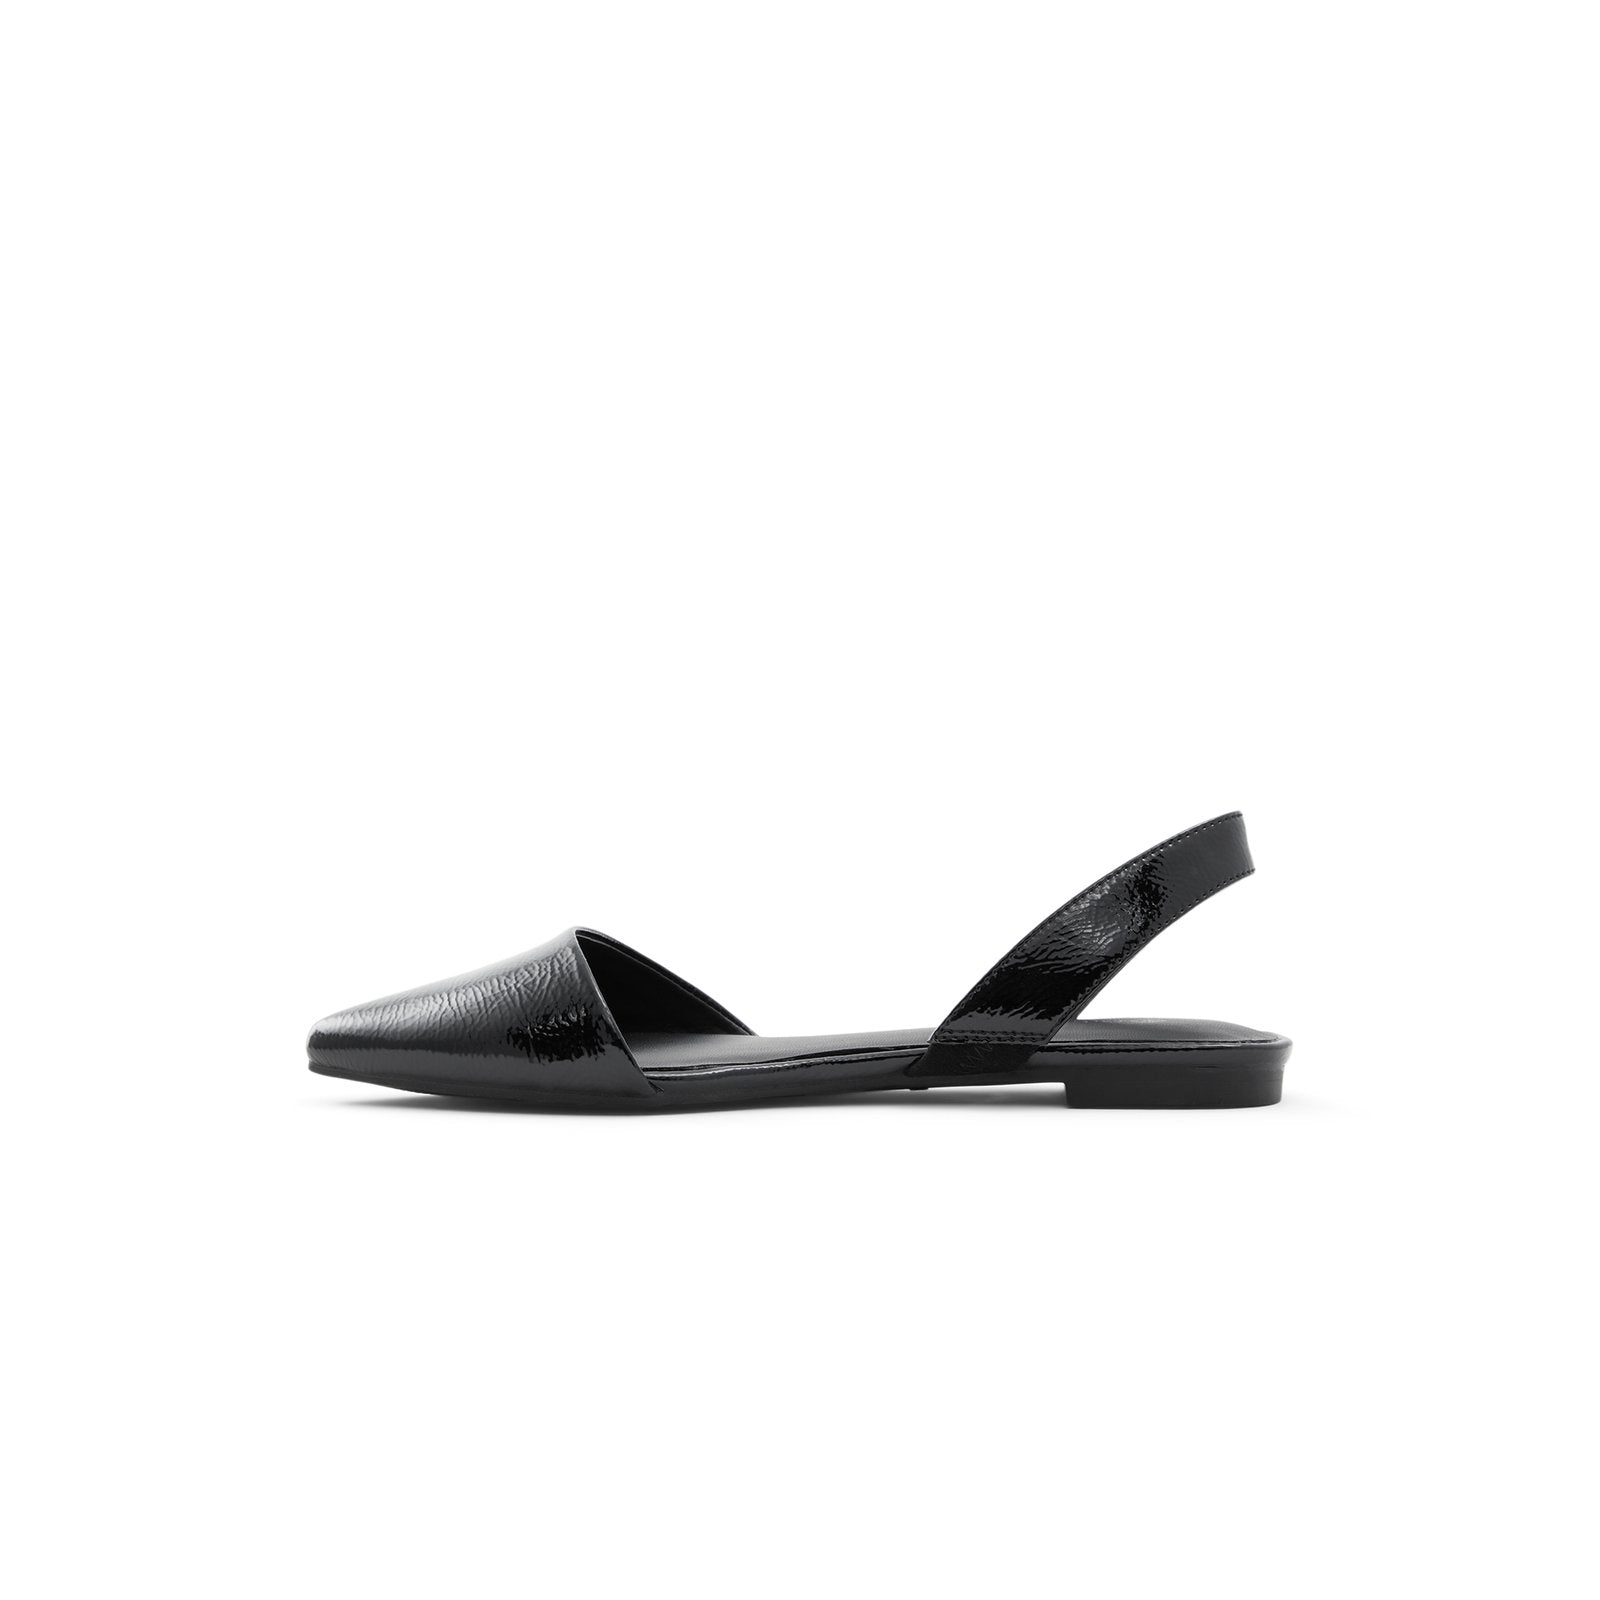 Pippen Women Shoes - Black - CALL IT SPRING KSA